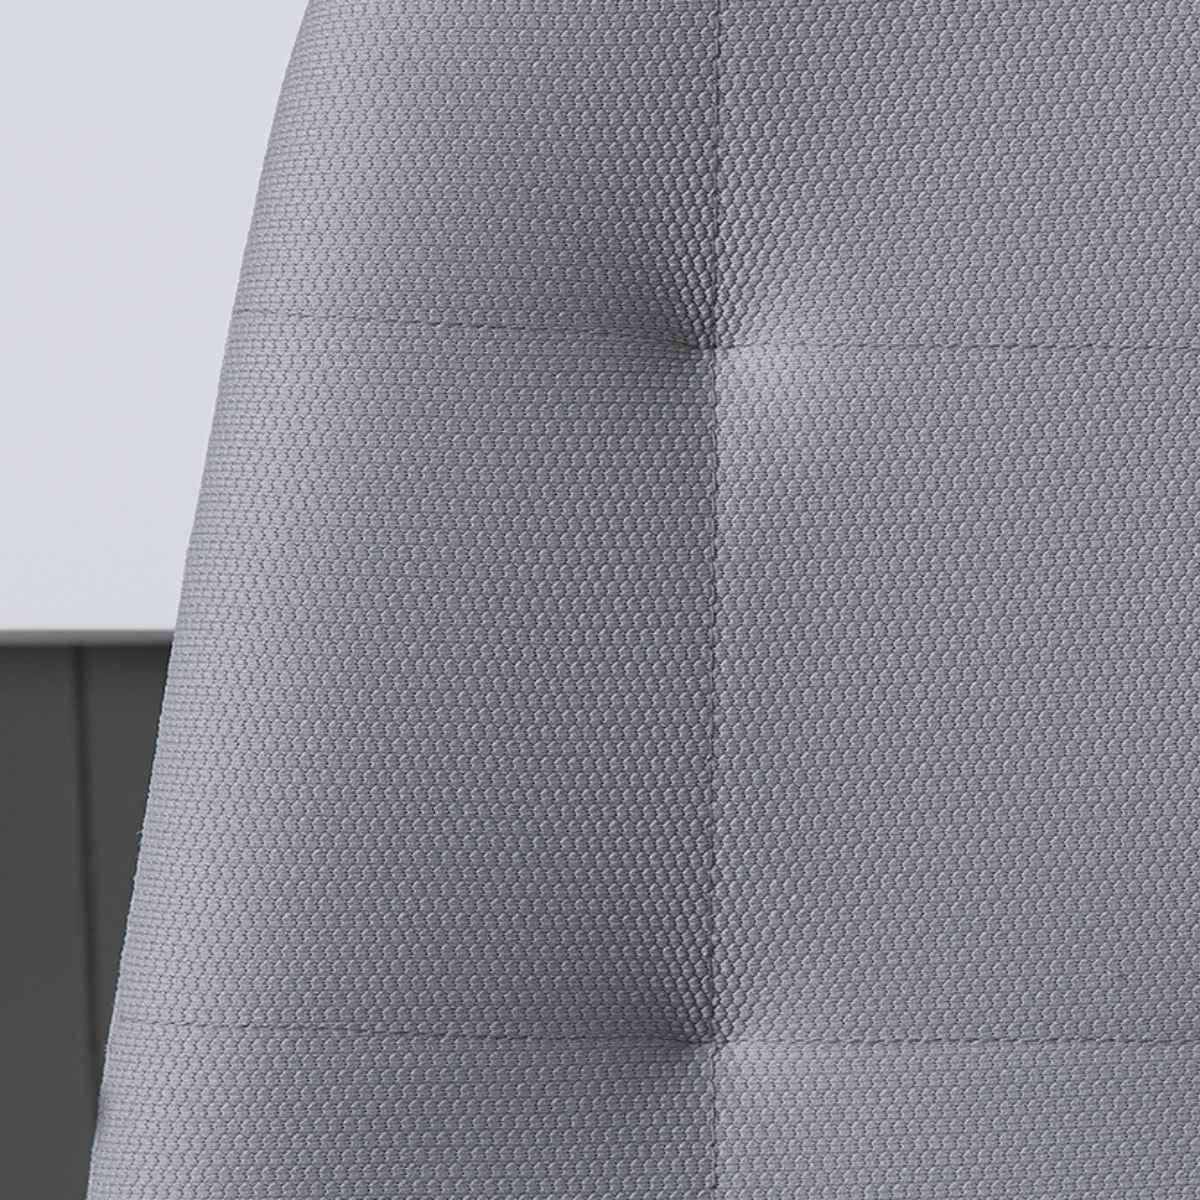 Stevie Desk Chair - Grey